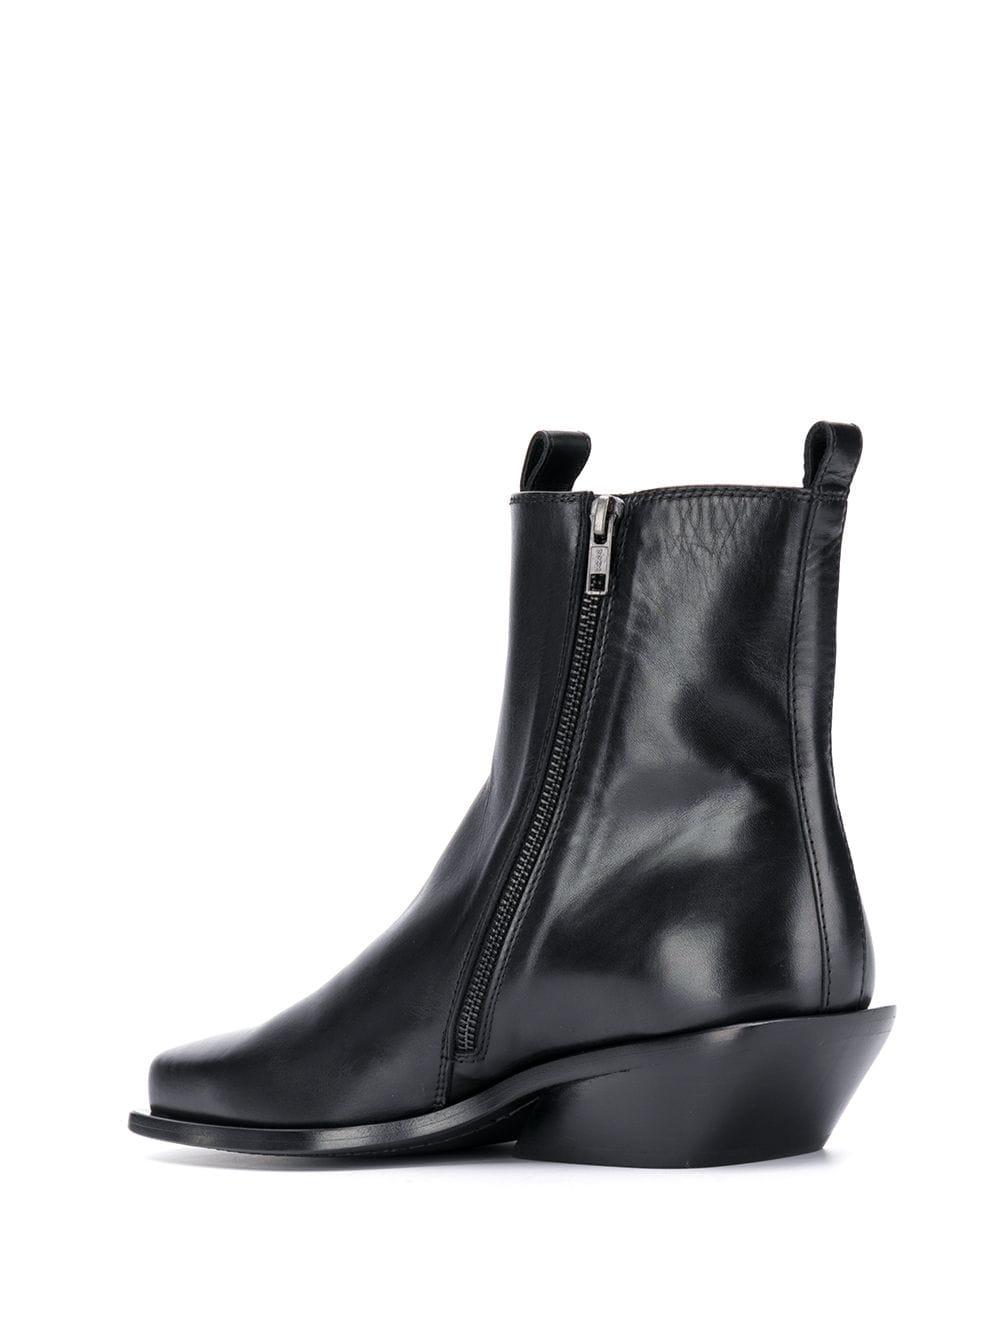 Ann Demeulemeester Square Toe Chelsea Boots in Black for Men - Lyst